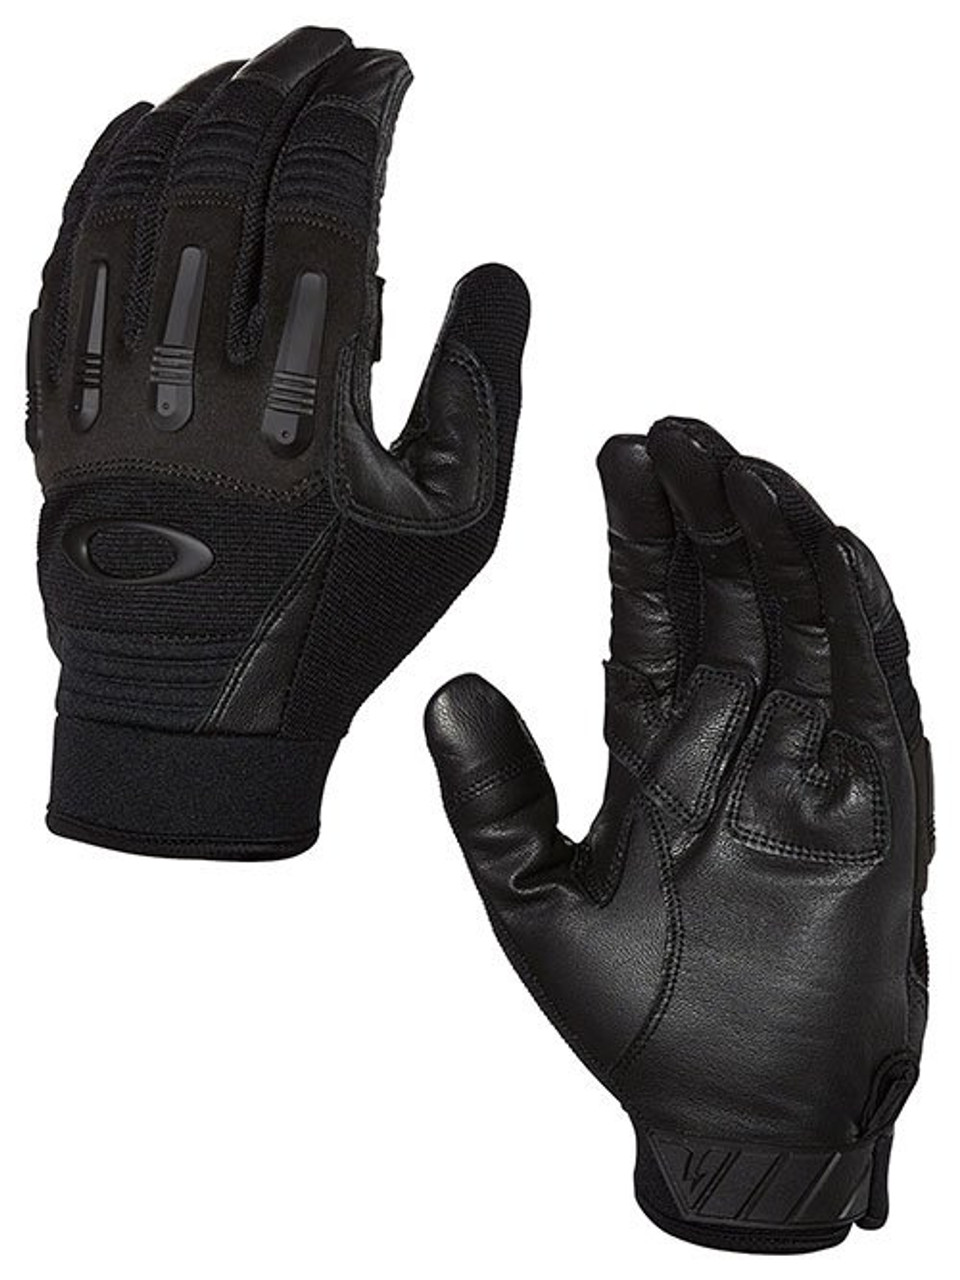 oakley gloves tactical